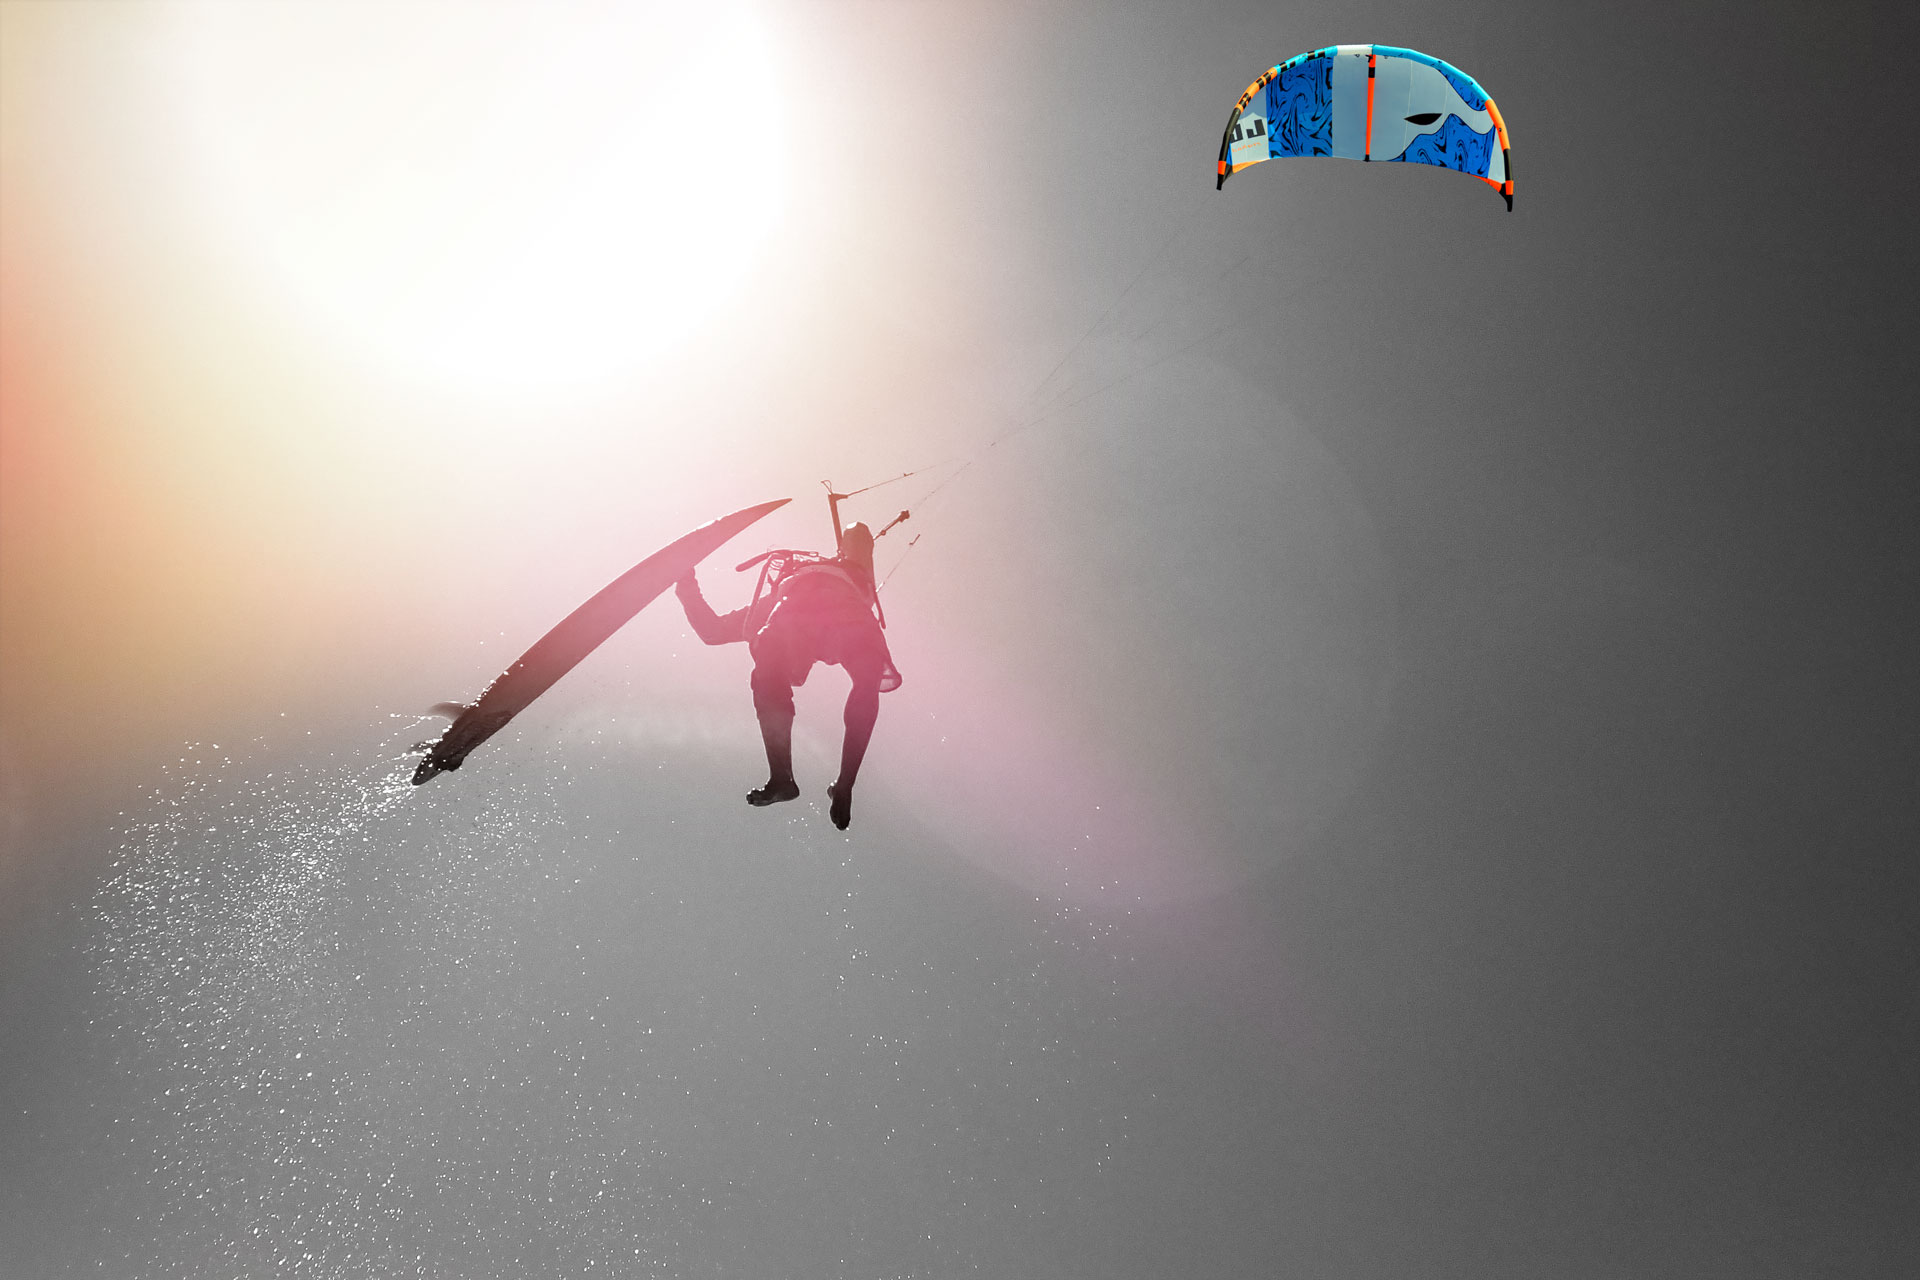 Bullkites, Bullsails, Kitesurfer jumping high with surfboard